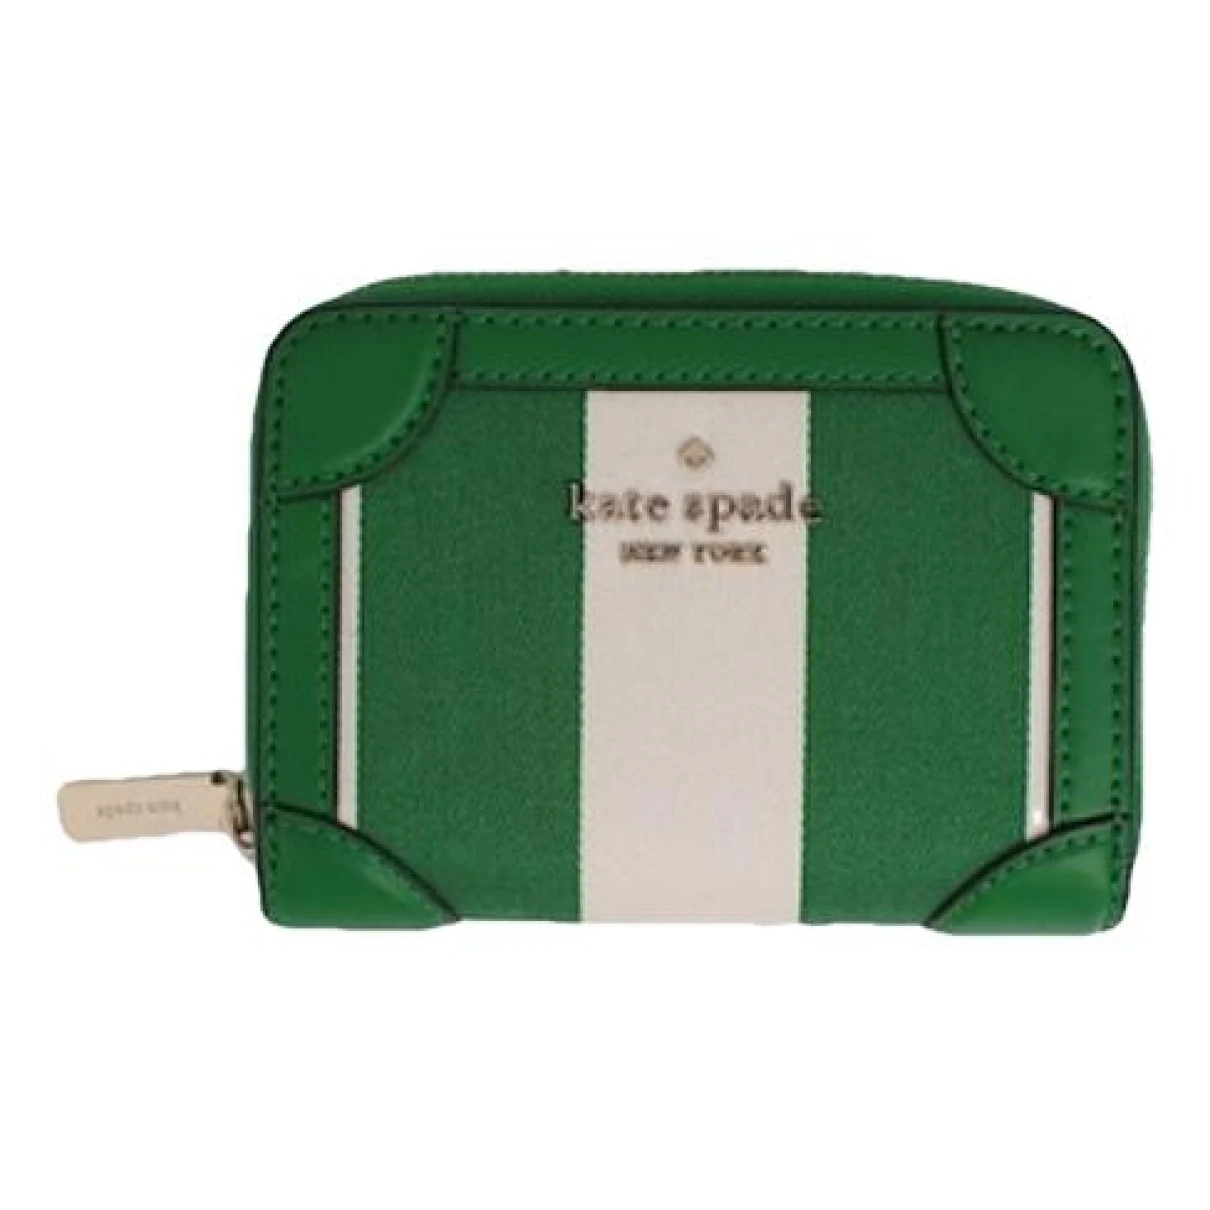 Pre-owned Kate Spade Wallet In Green